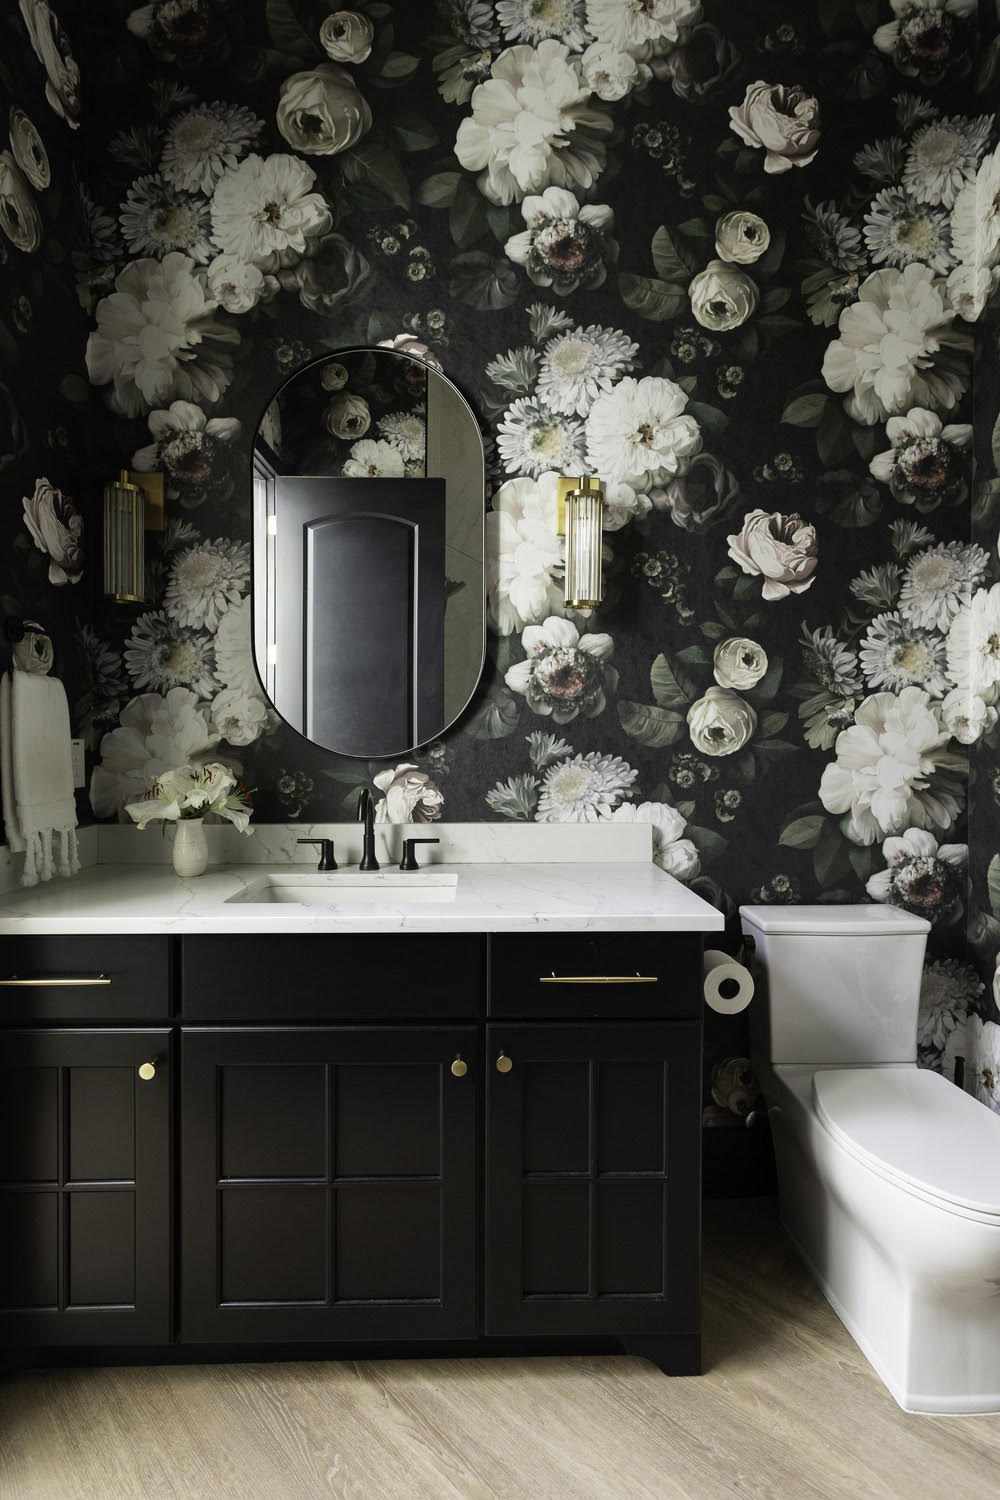 Beautiful bathroom wallpaper ideas